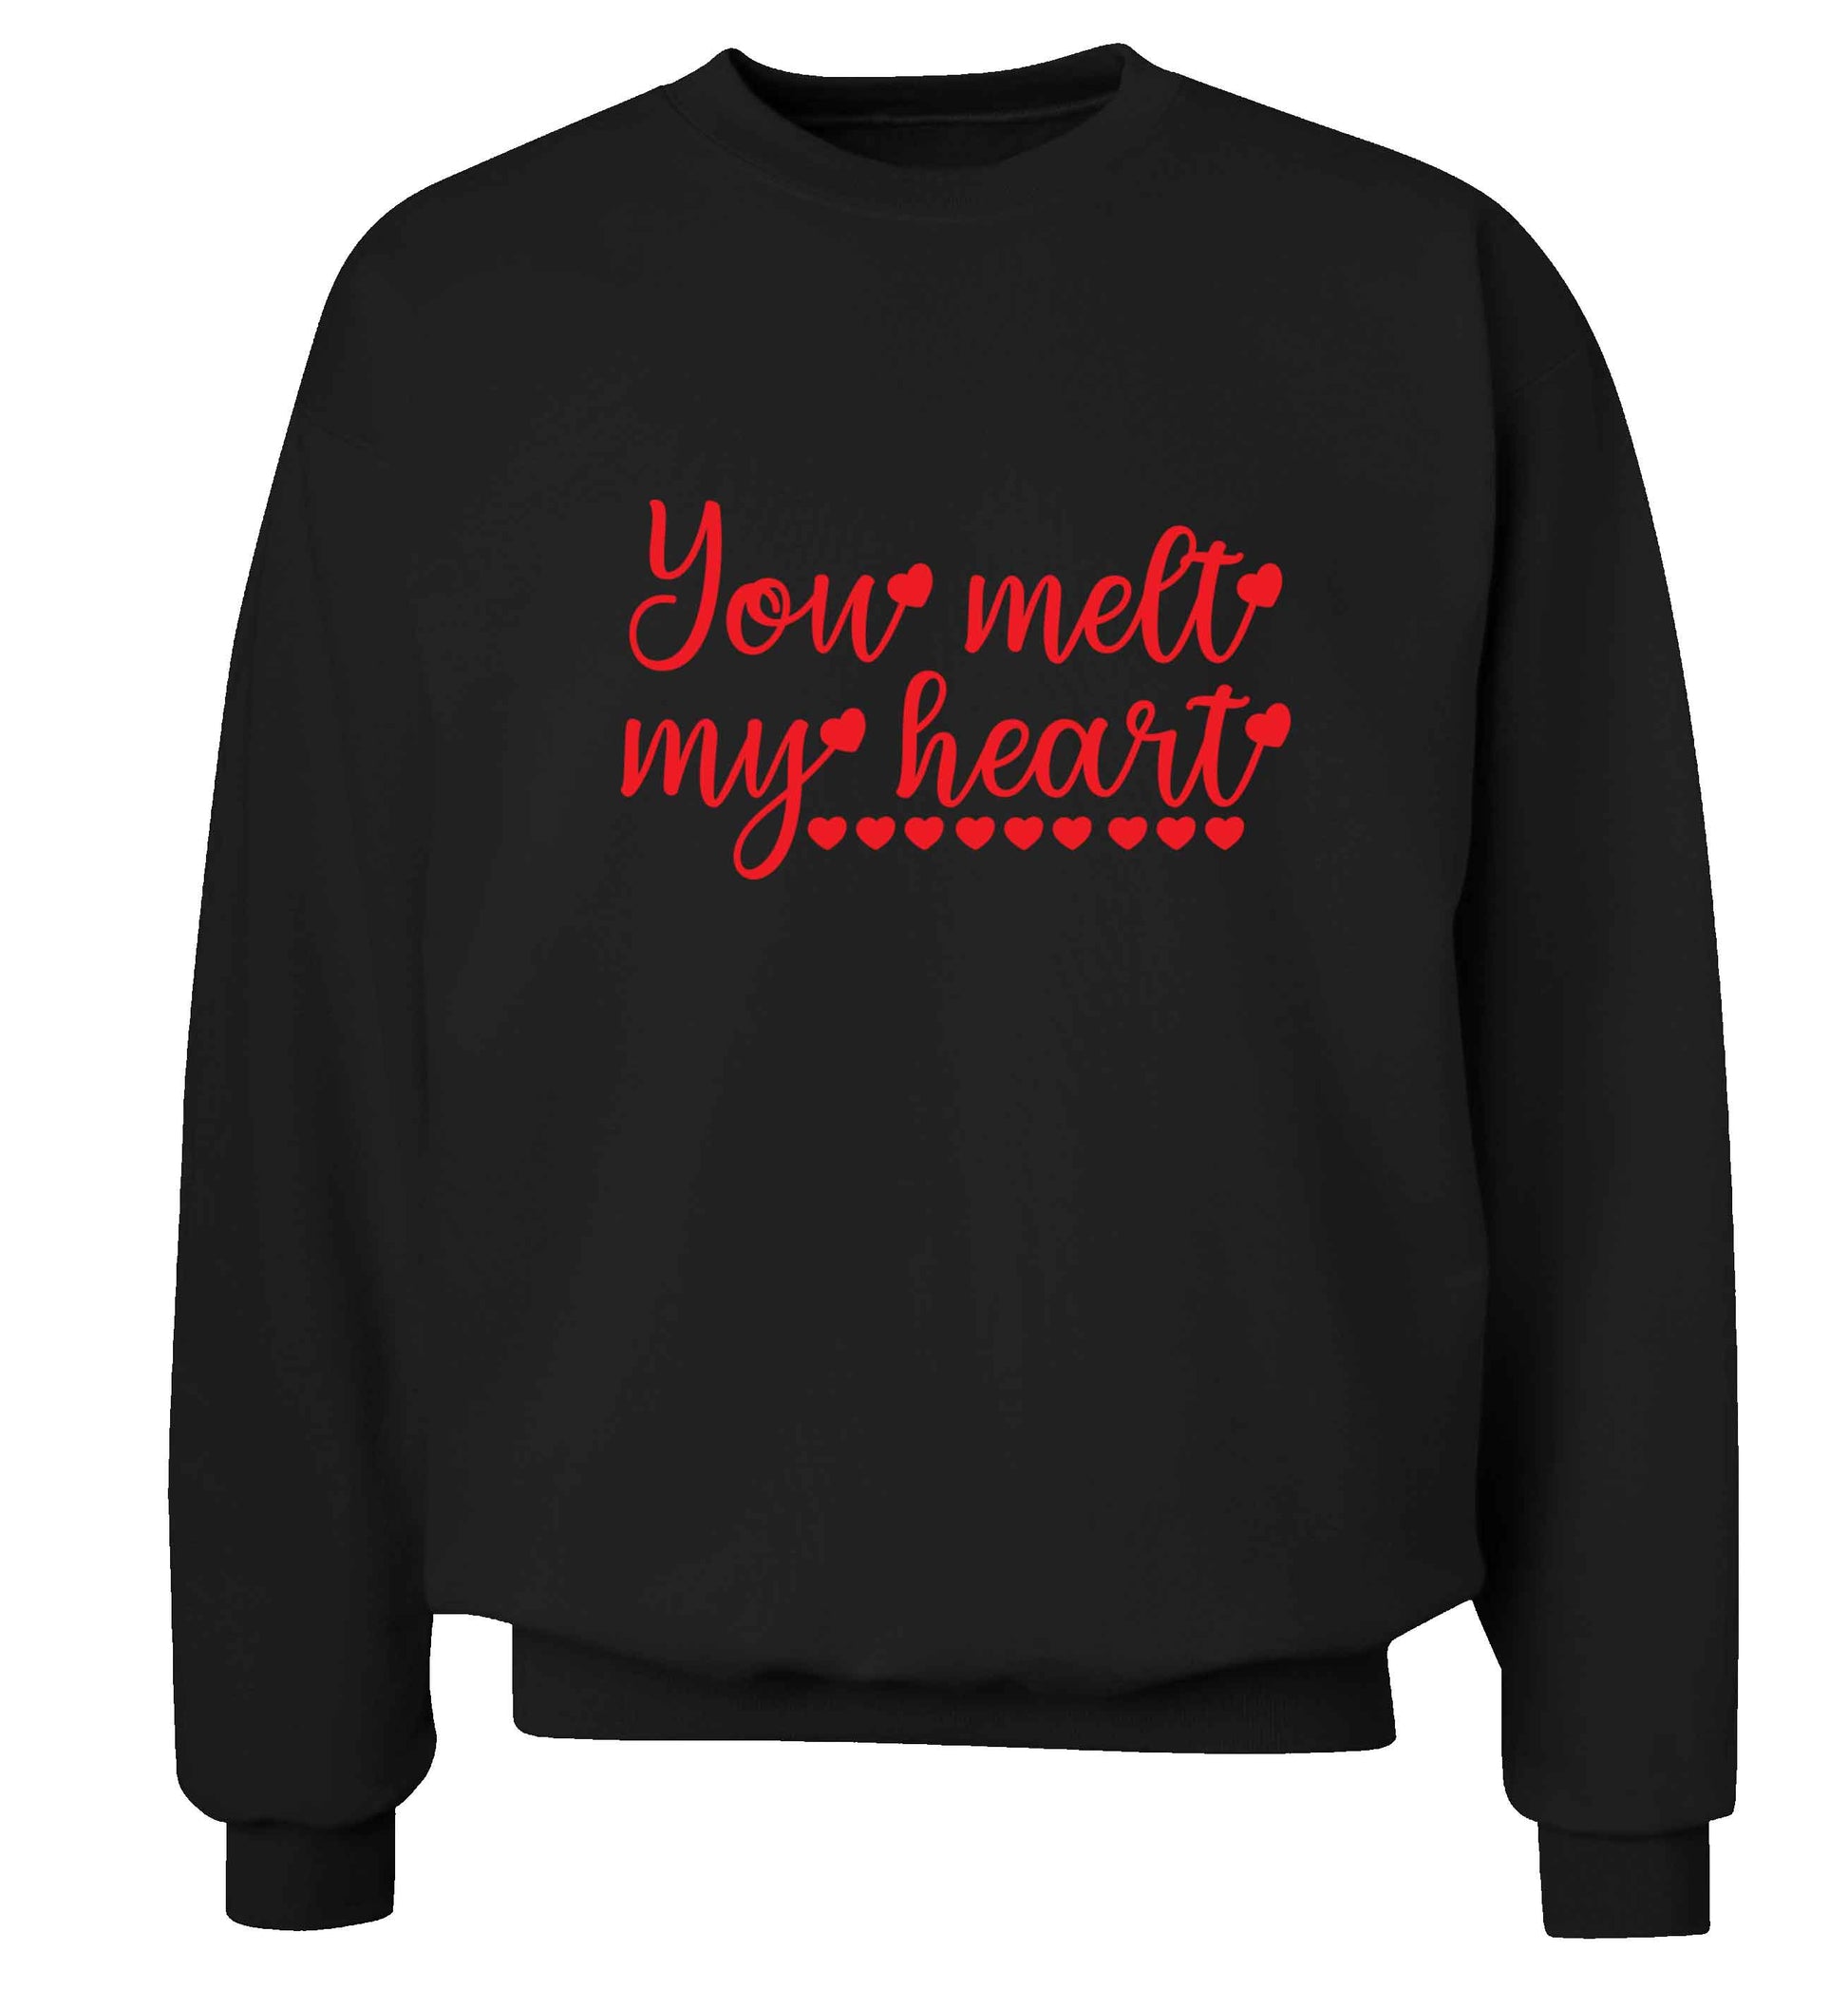 You melt my heart adult's unisex black sweater 2XL